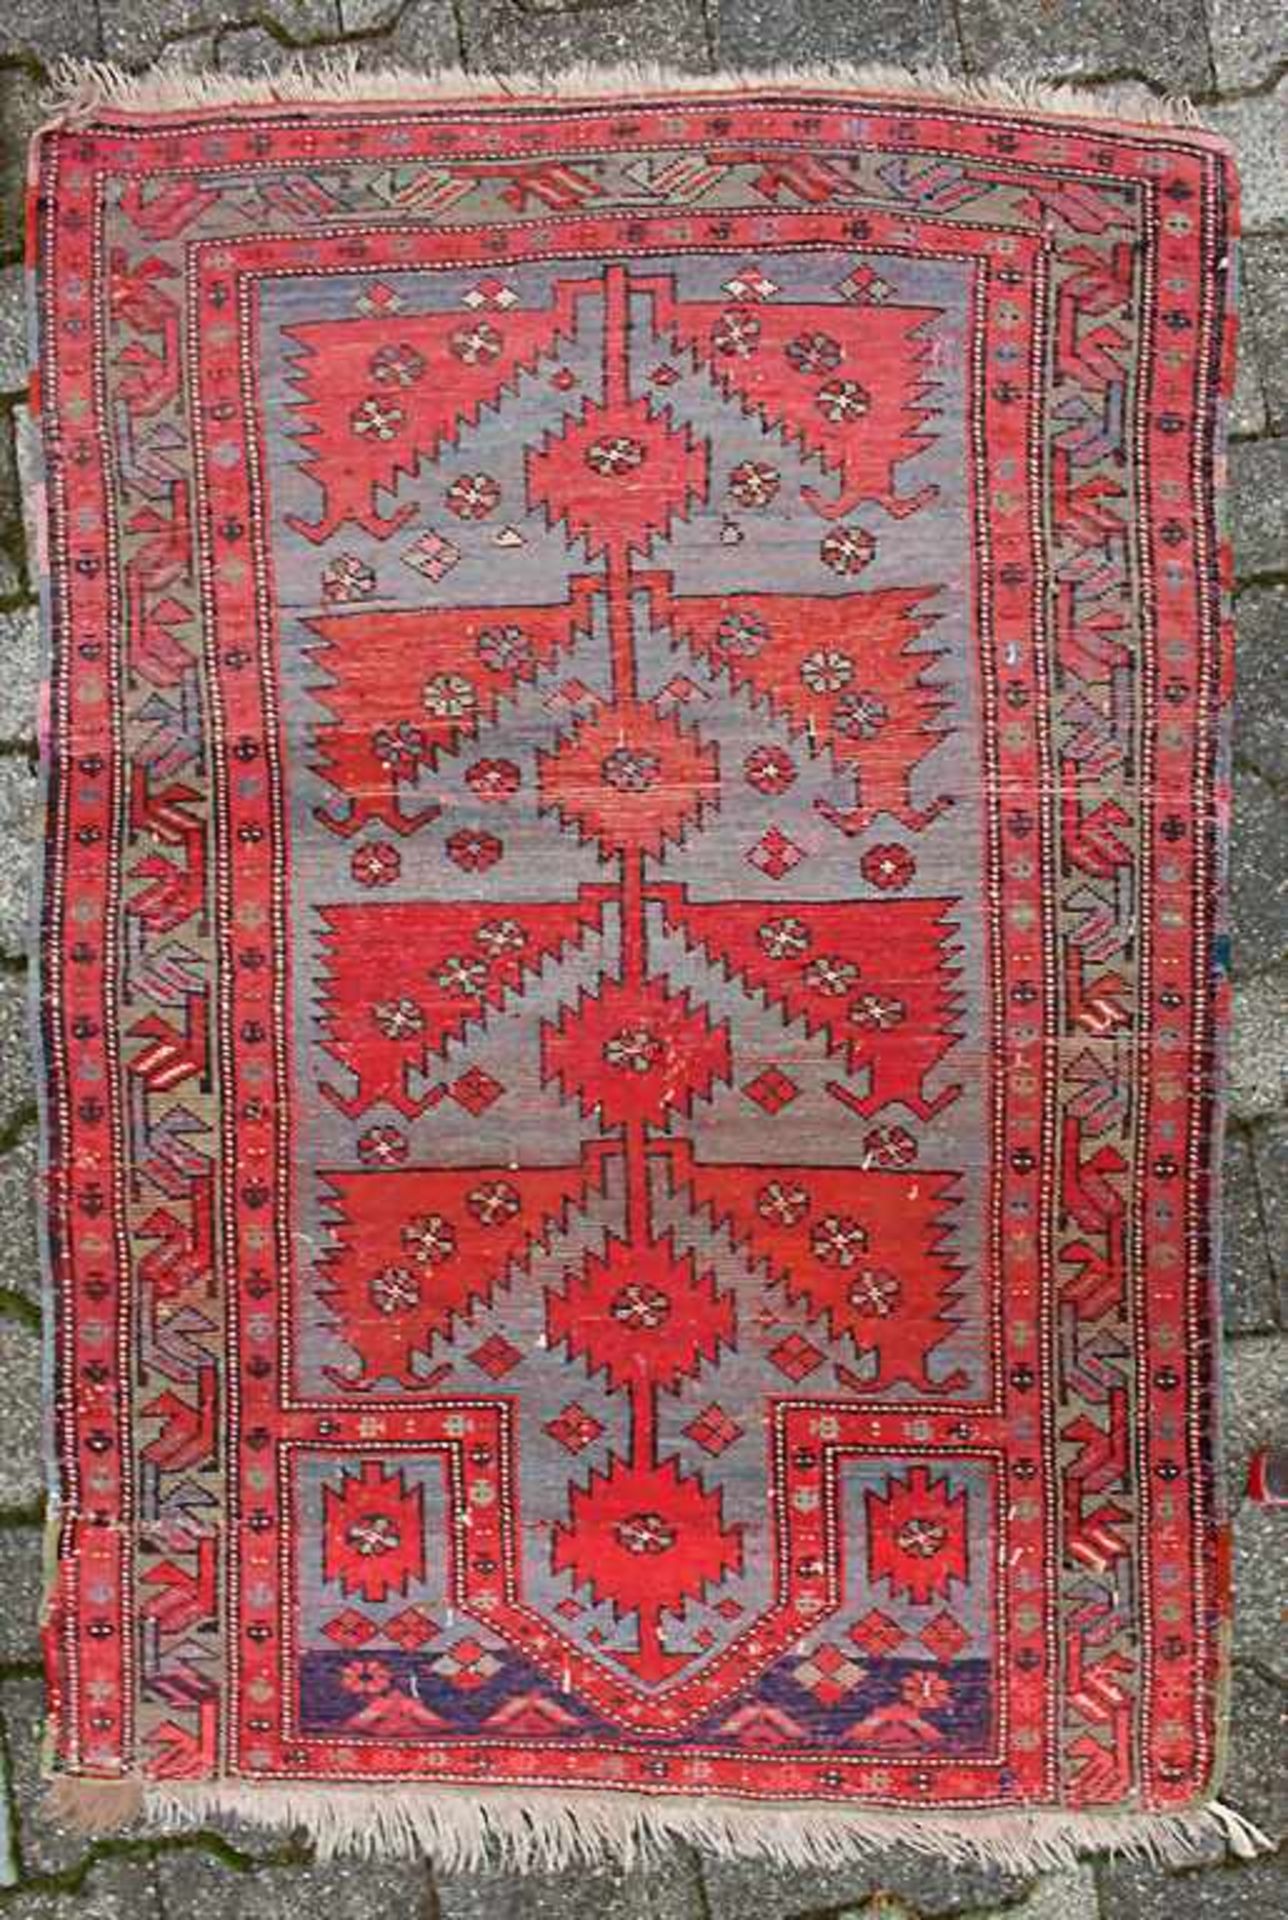 Teppich / A carpet, AnatolienMaterial: Wolle auf Baumwolle, Maße: 130 x 79 cm,Zustand: gut, - Image 2 of 4